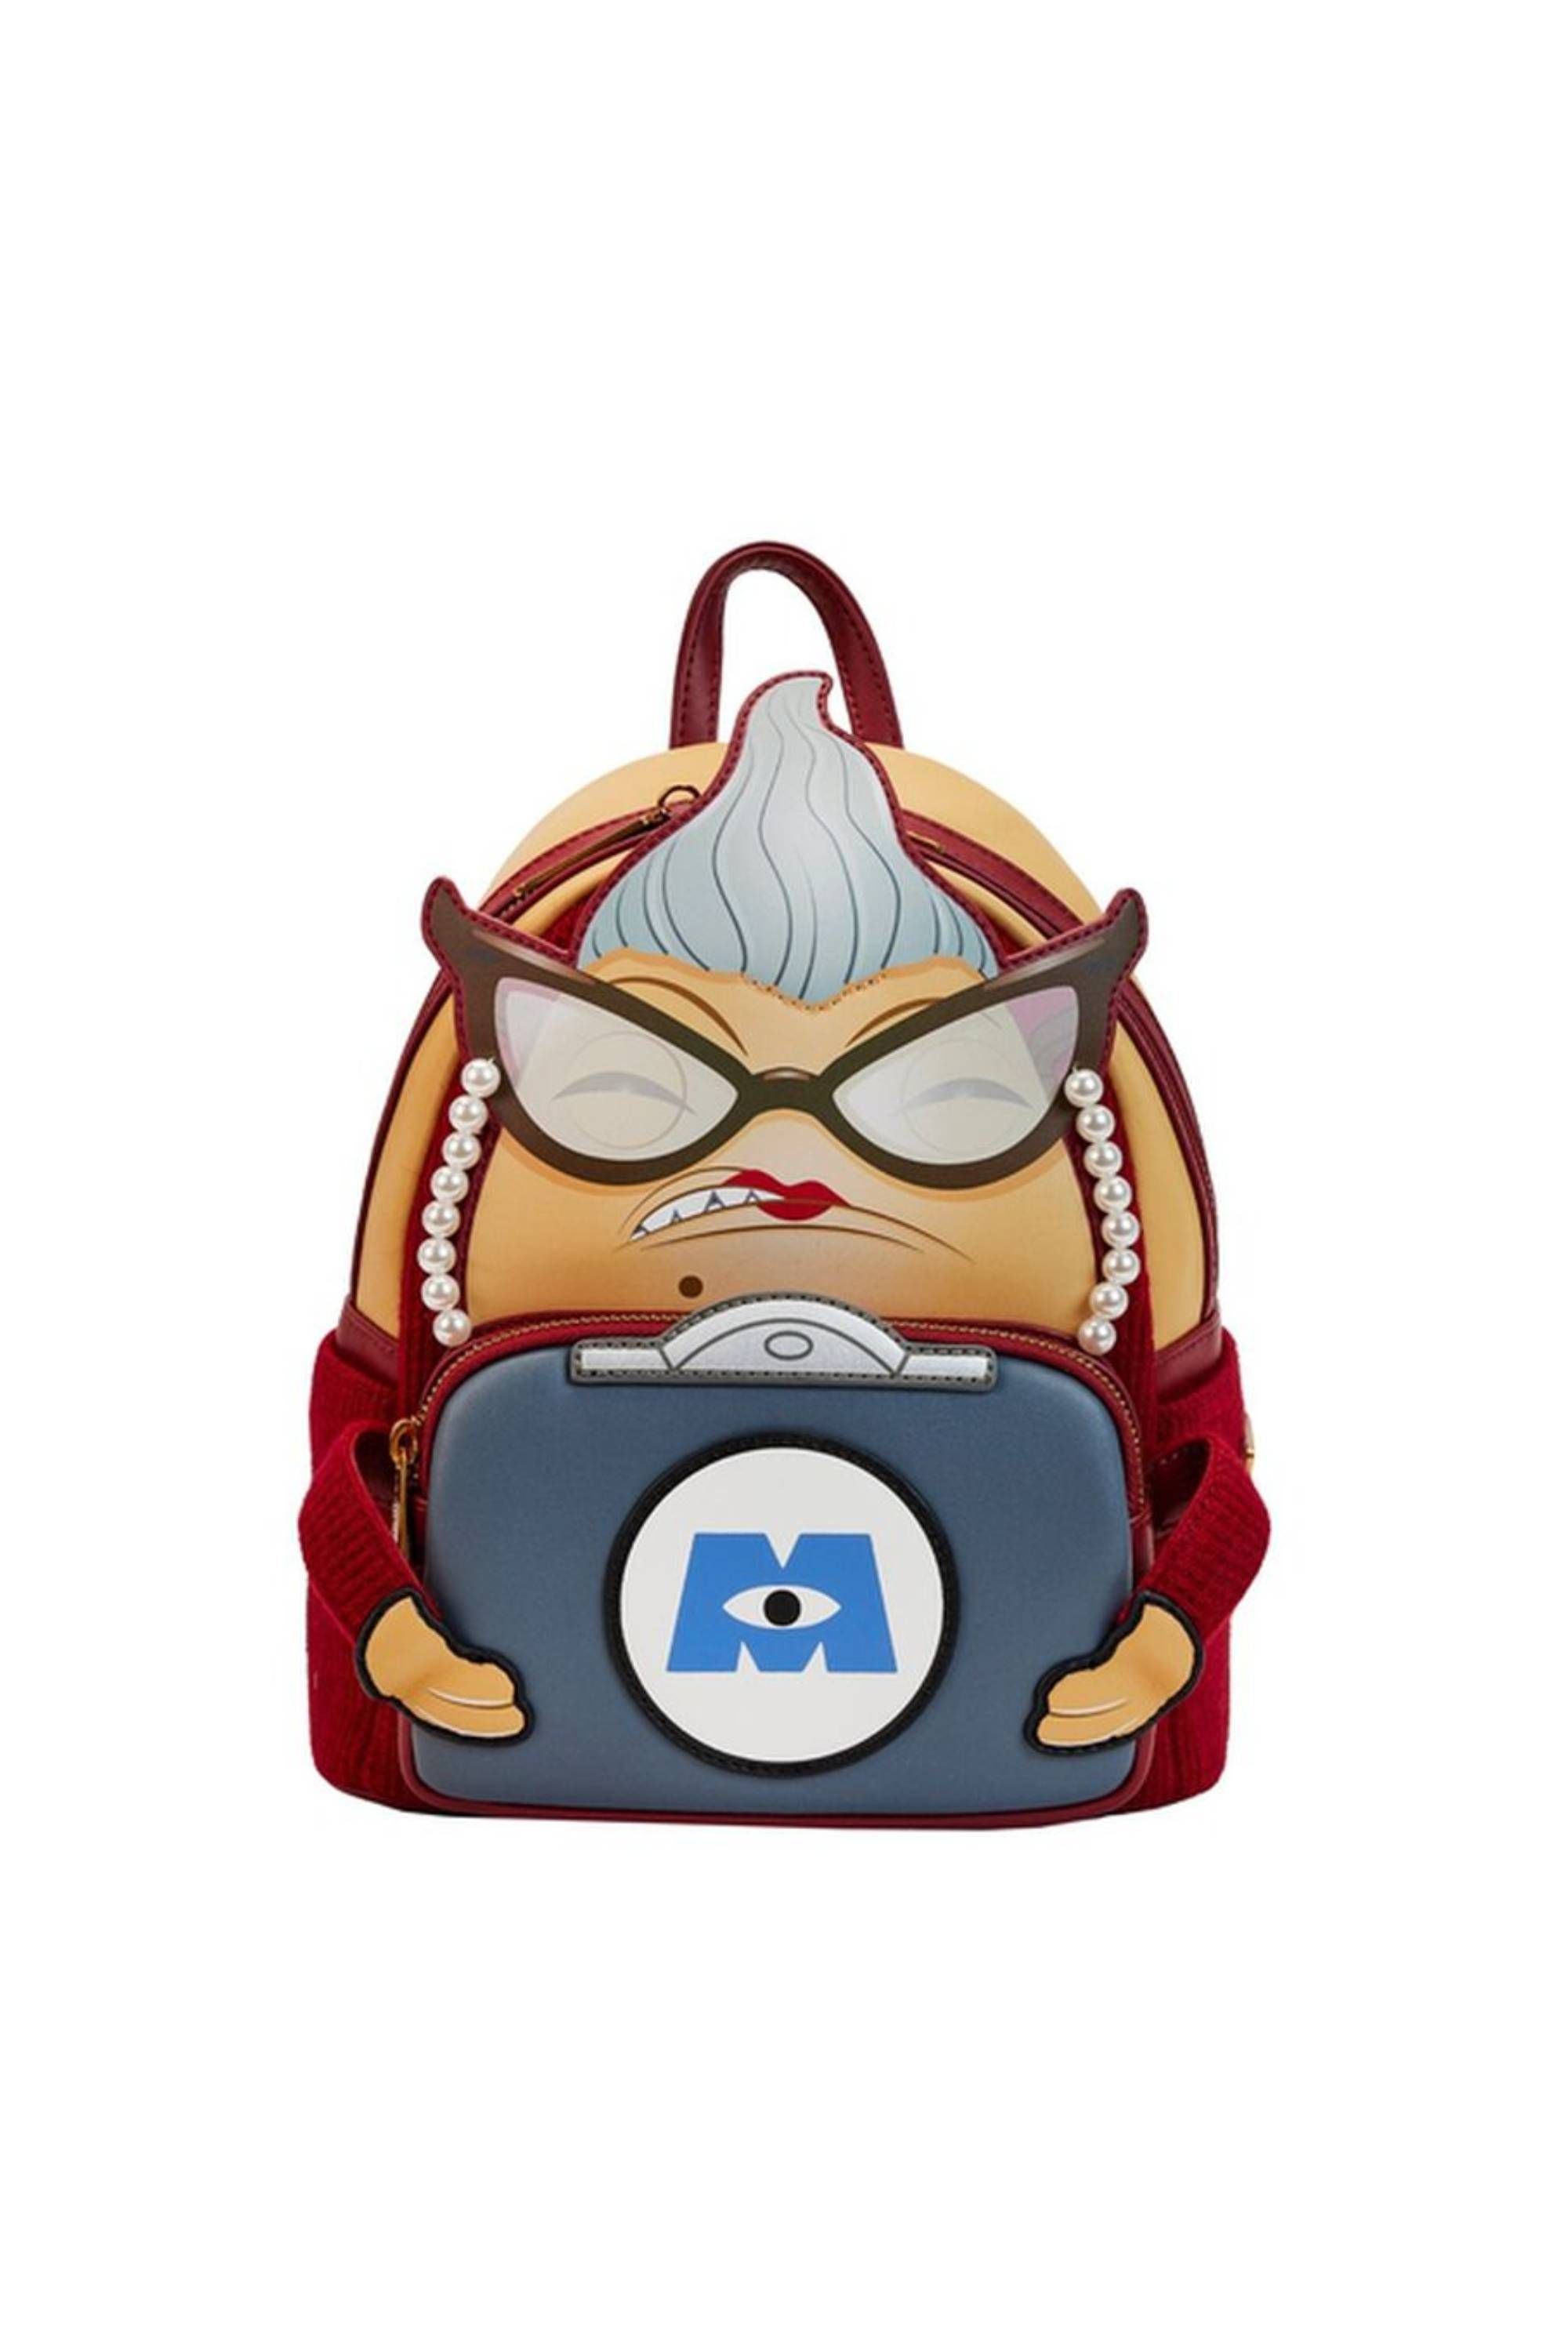 Monsters, Inc. Roz Mini Backpack